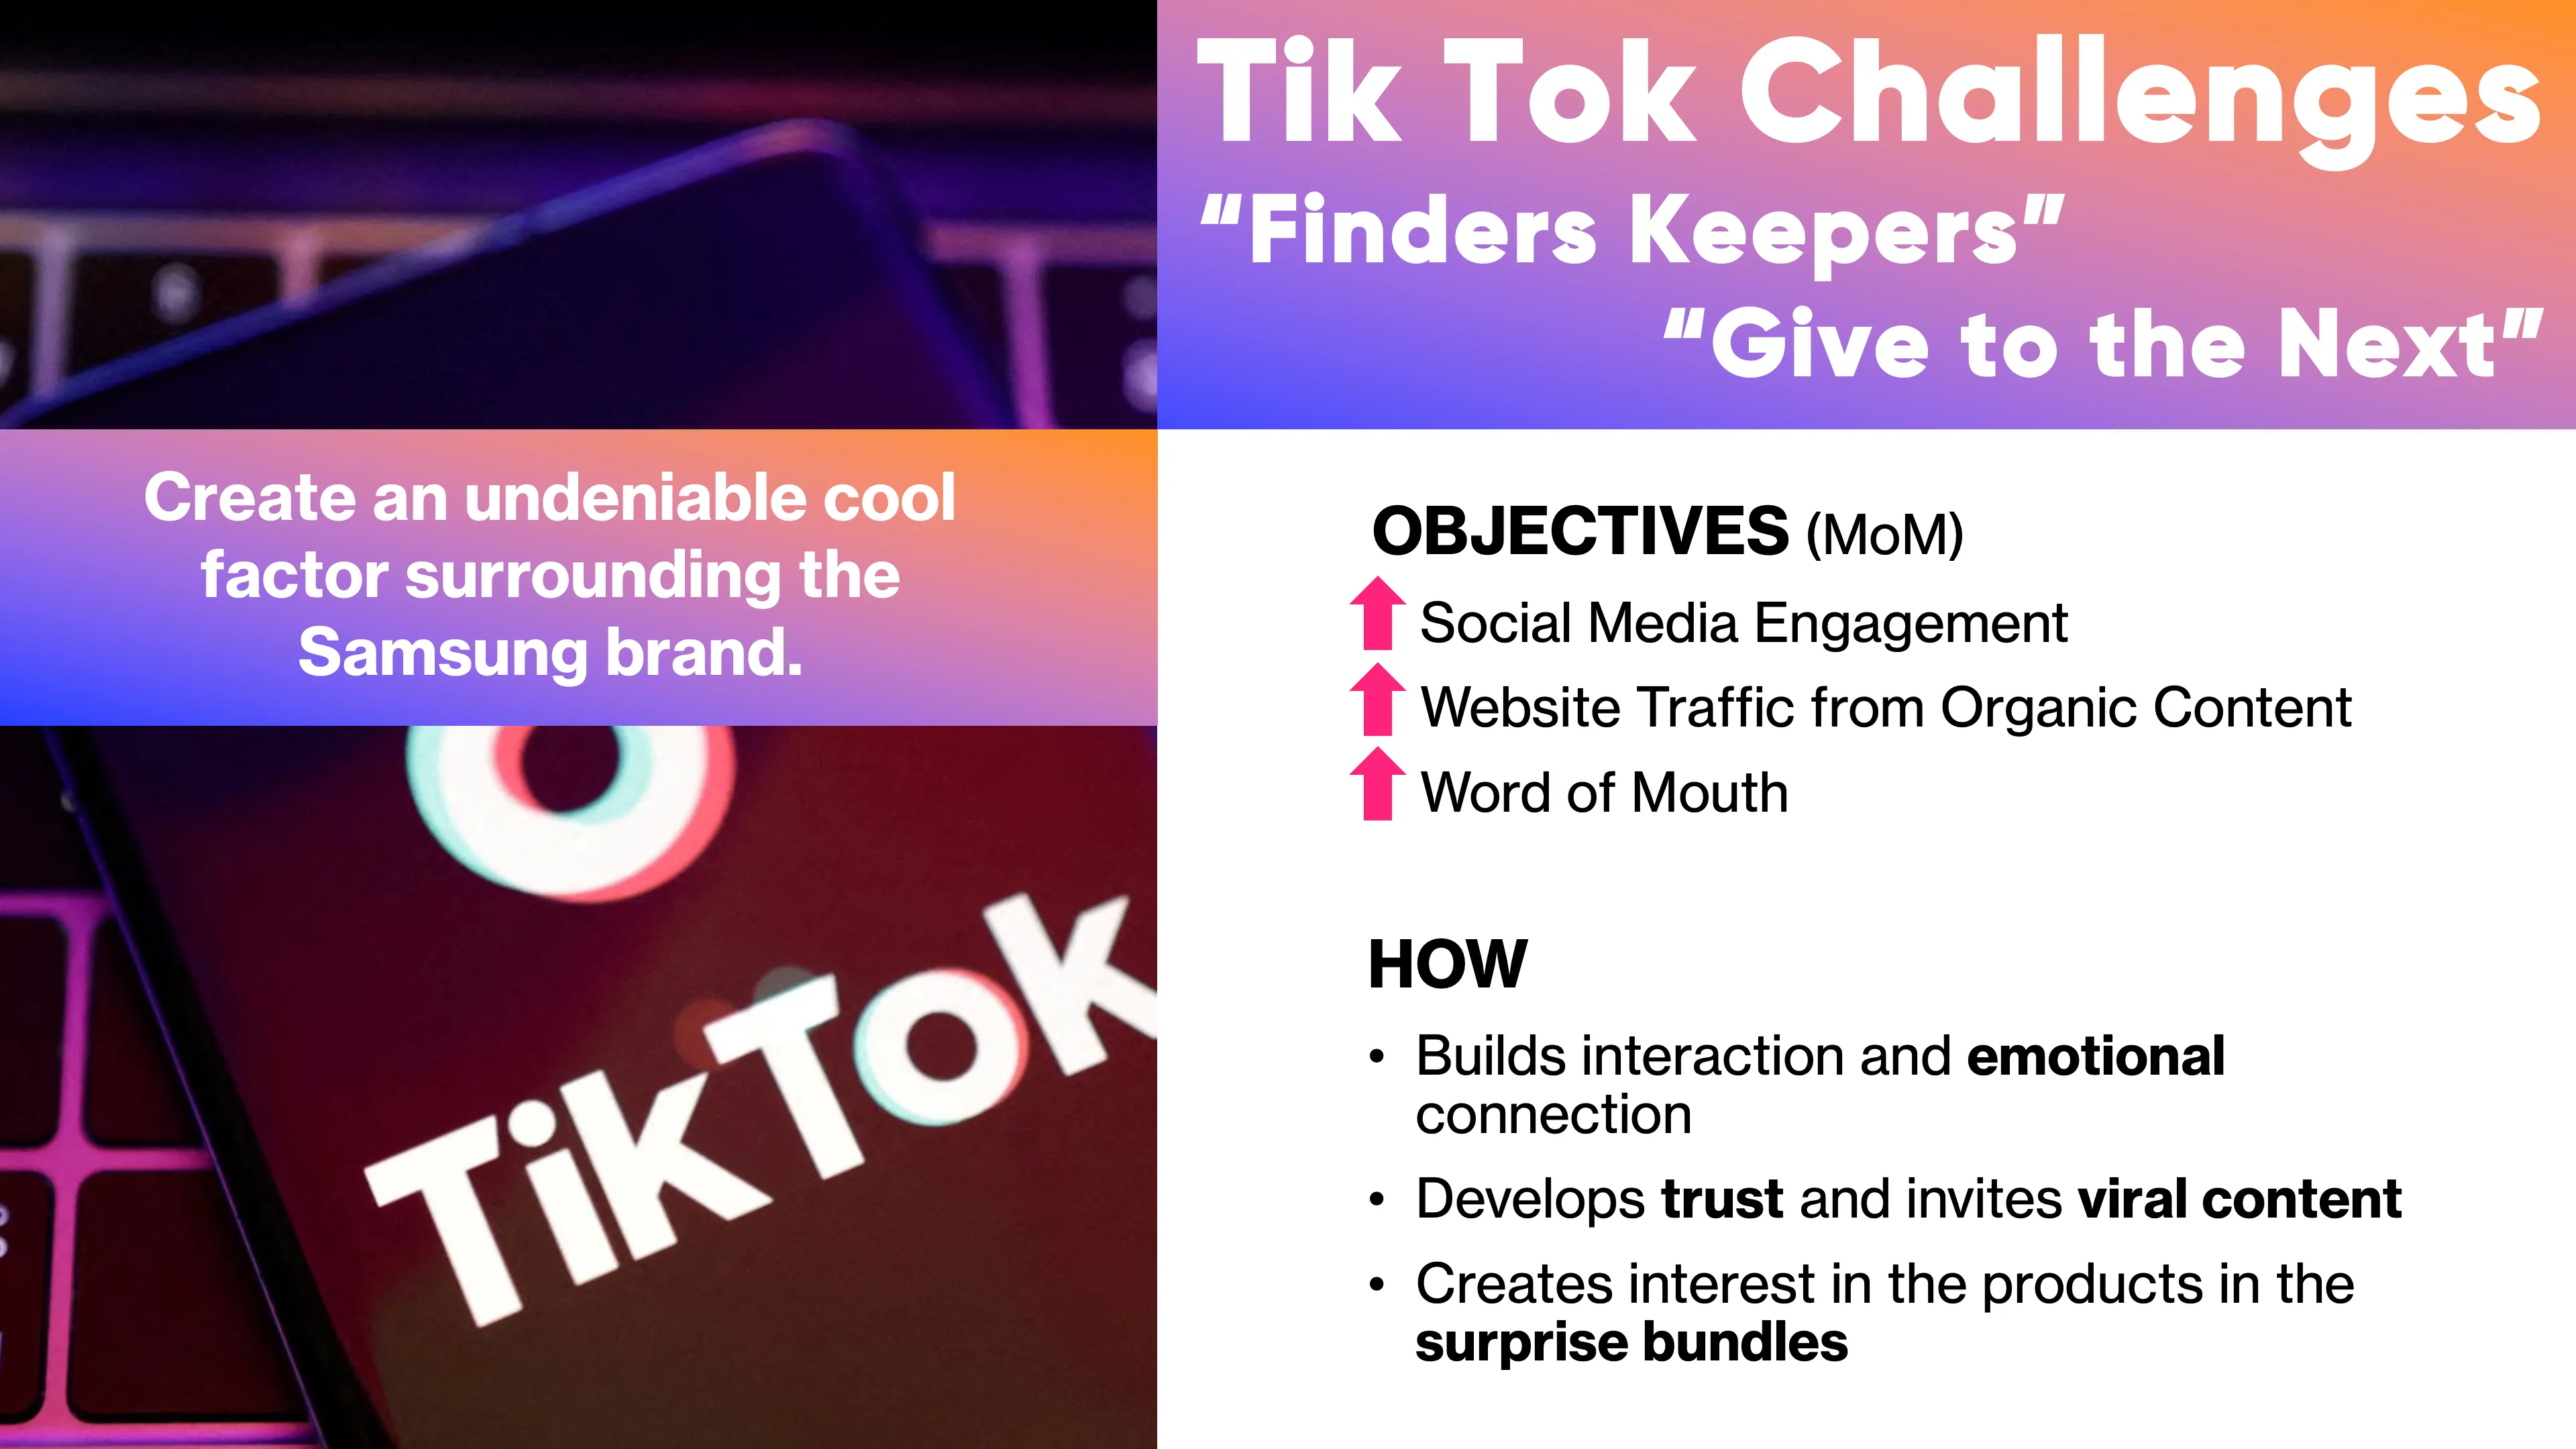 Slide 20, detailing how TikTok challenges could help improve Samsung's image.